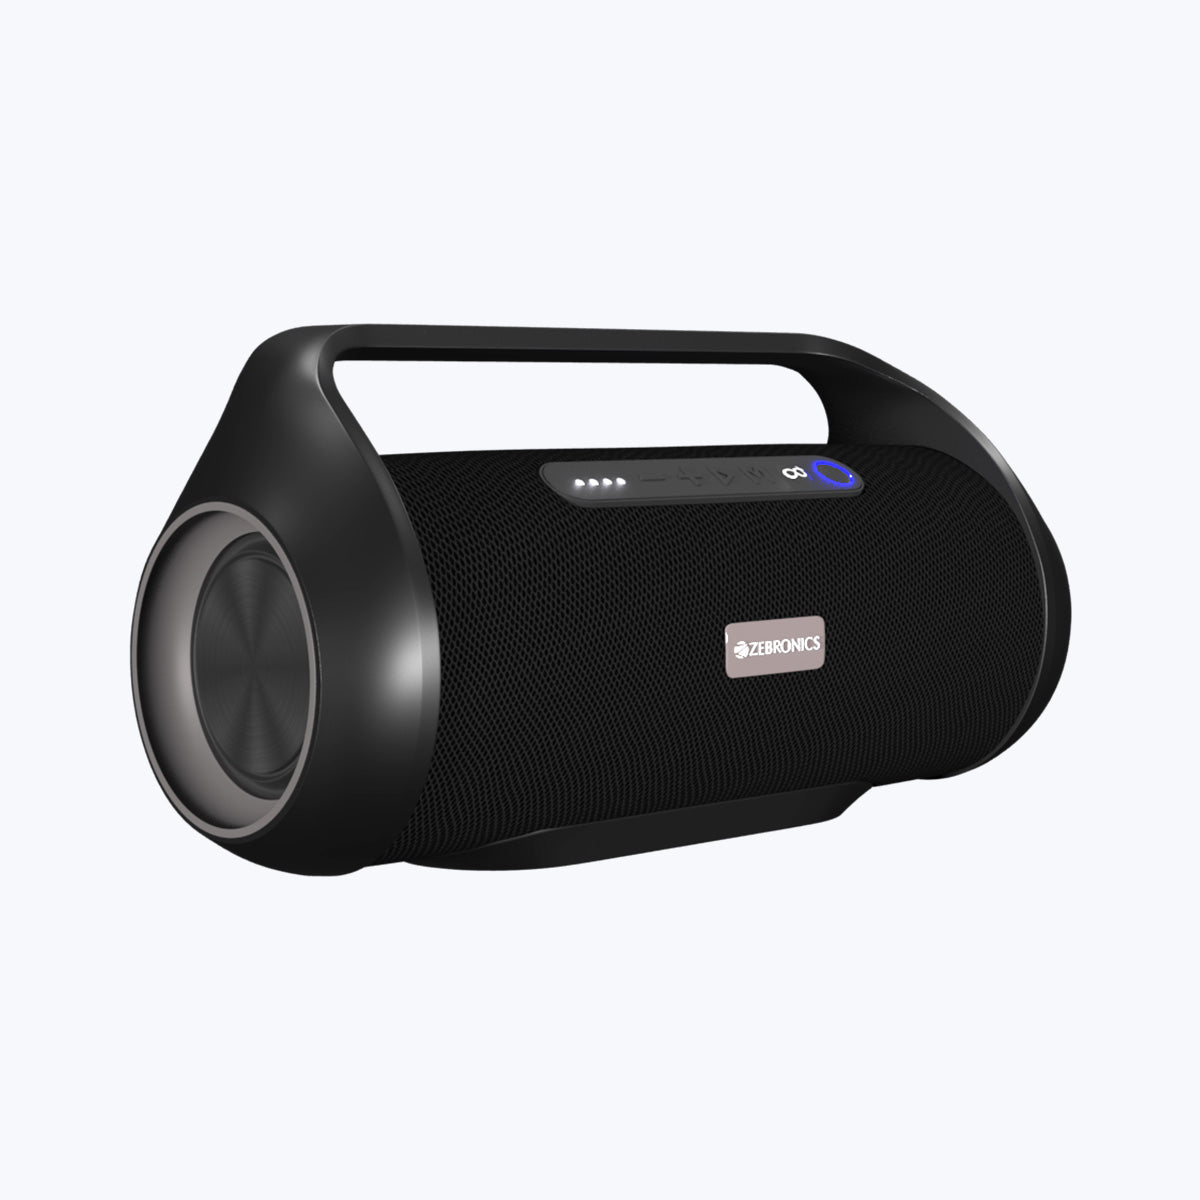 Zeb-Sound Feast 300 - Wireless Speaker - Zebronics